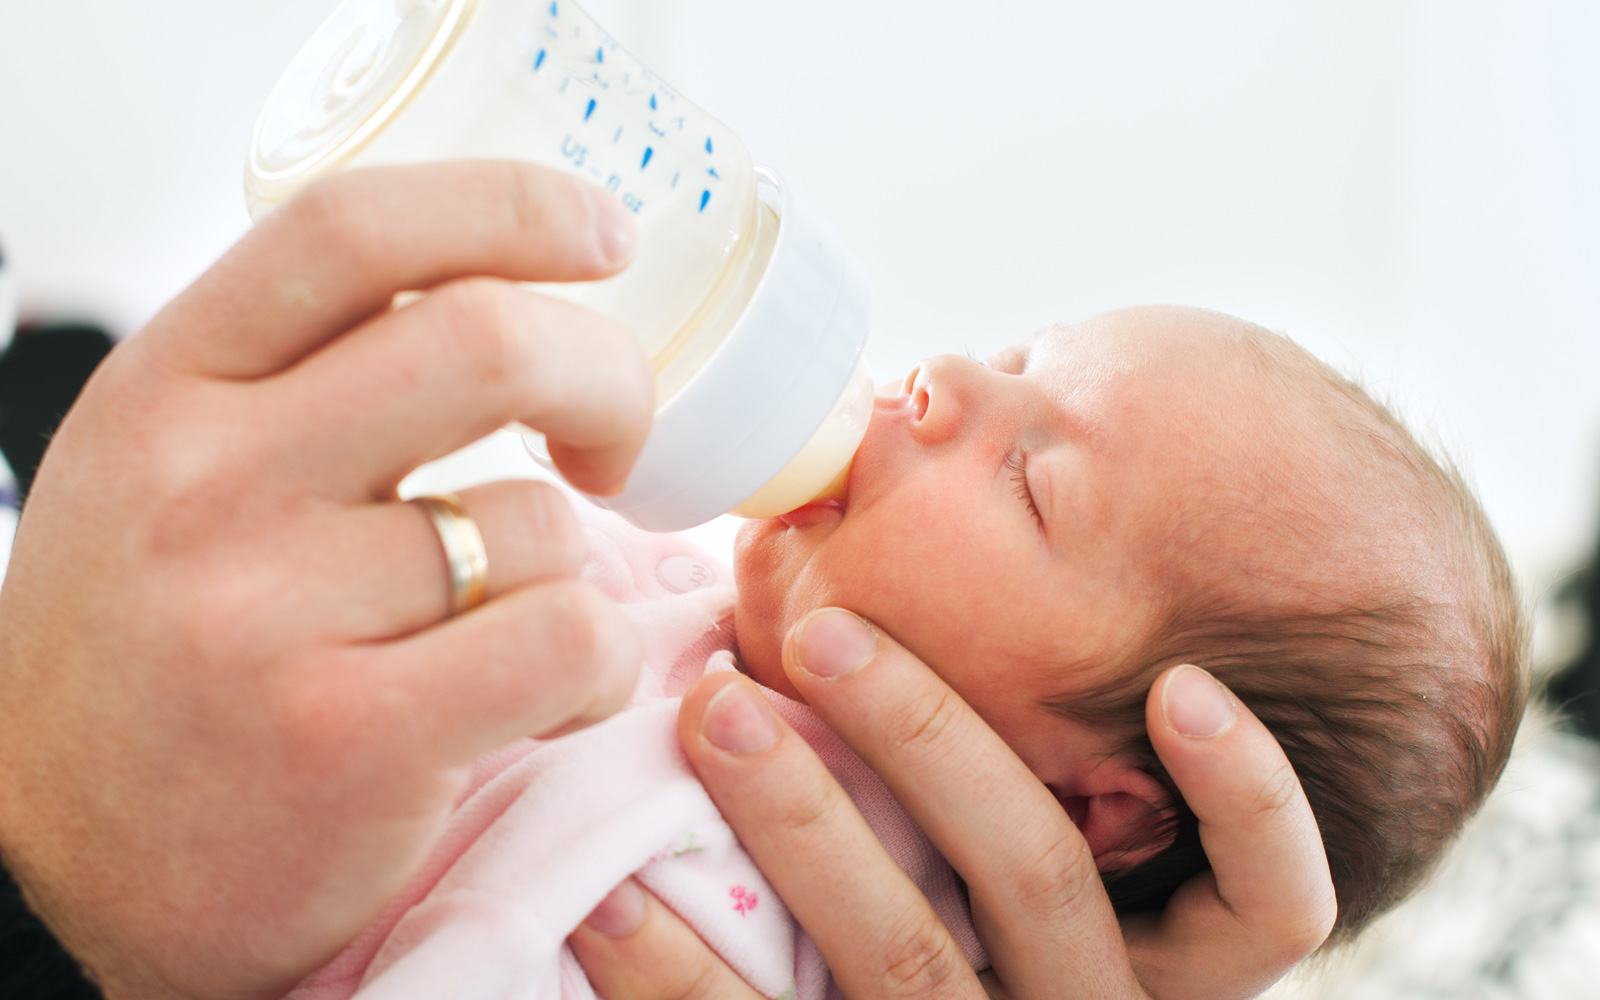 Person Feeding Baby a Bottle